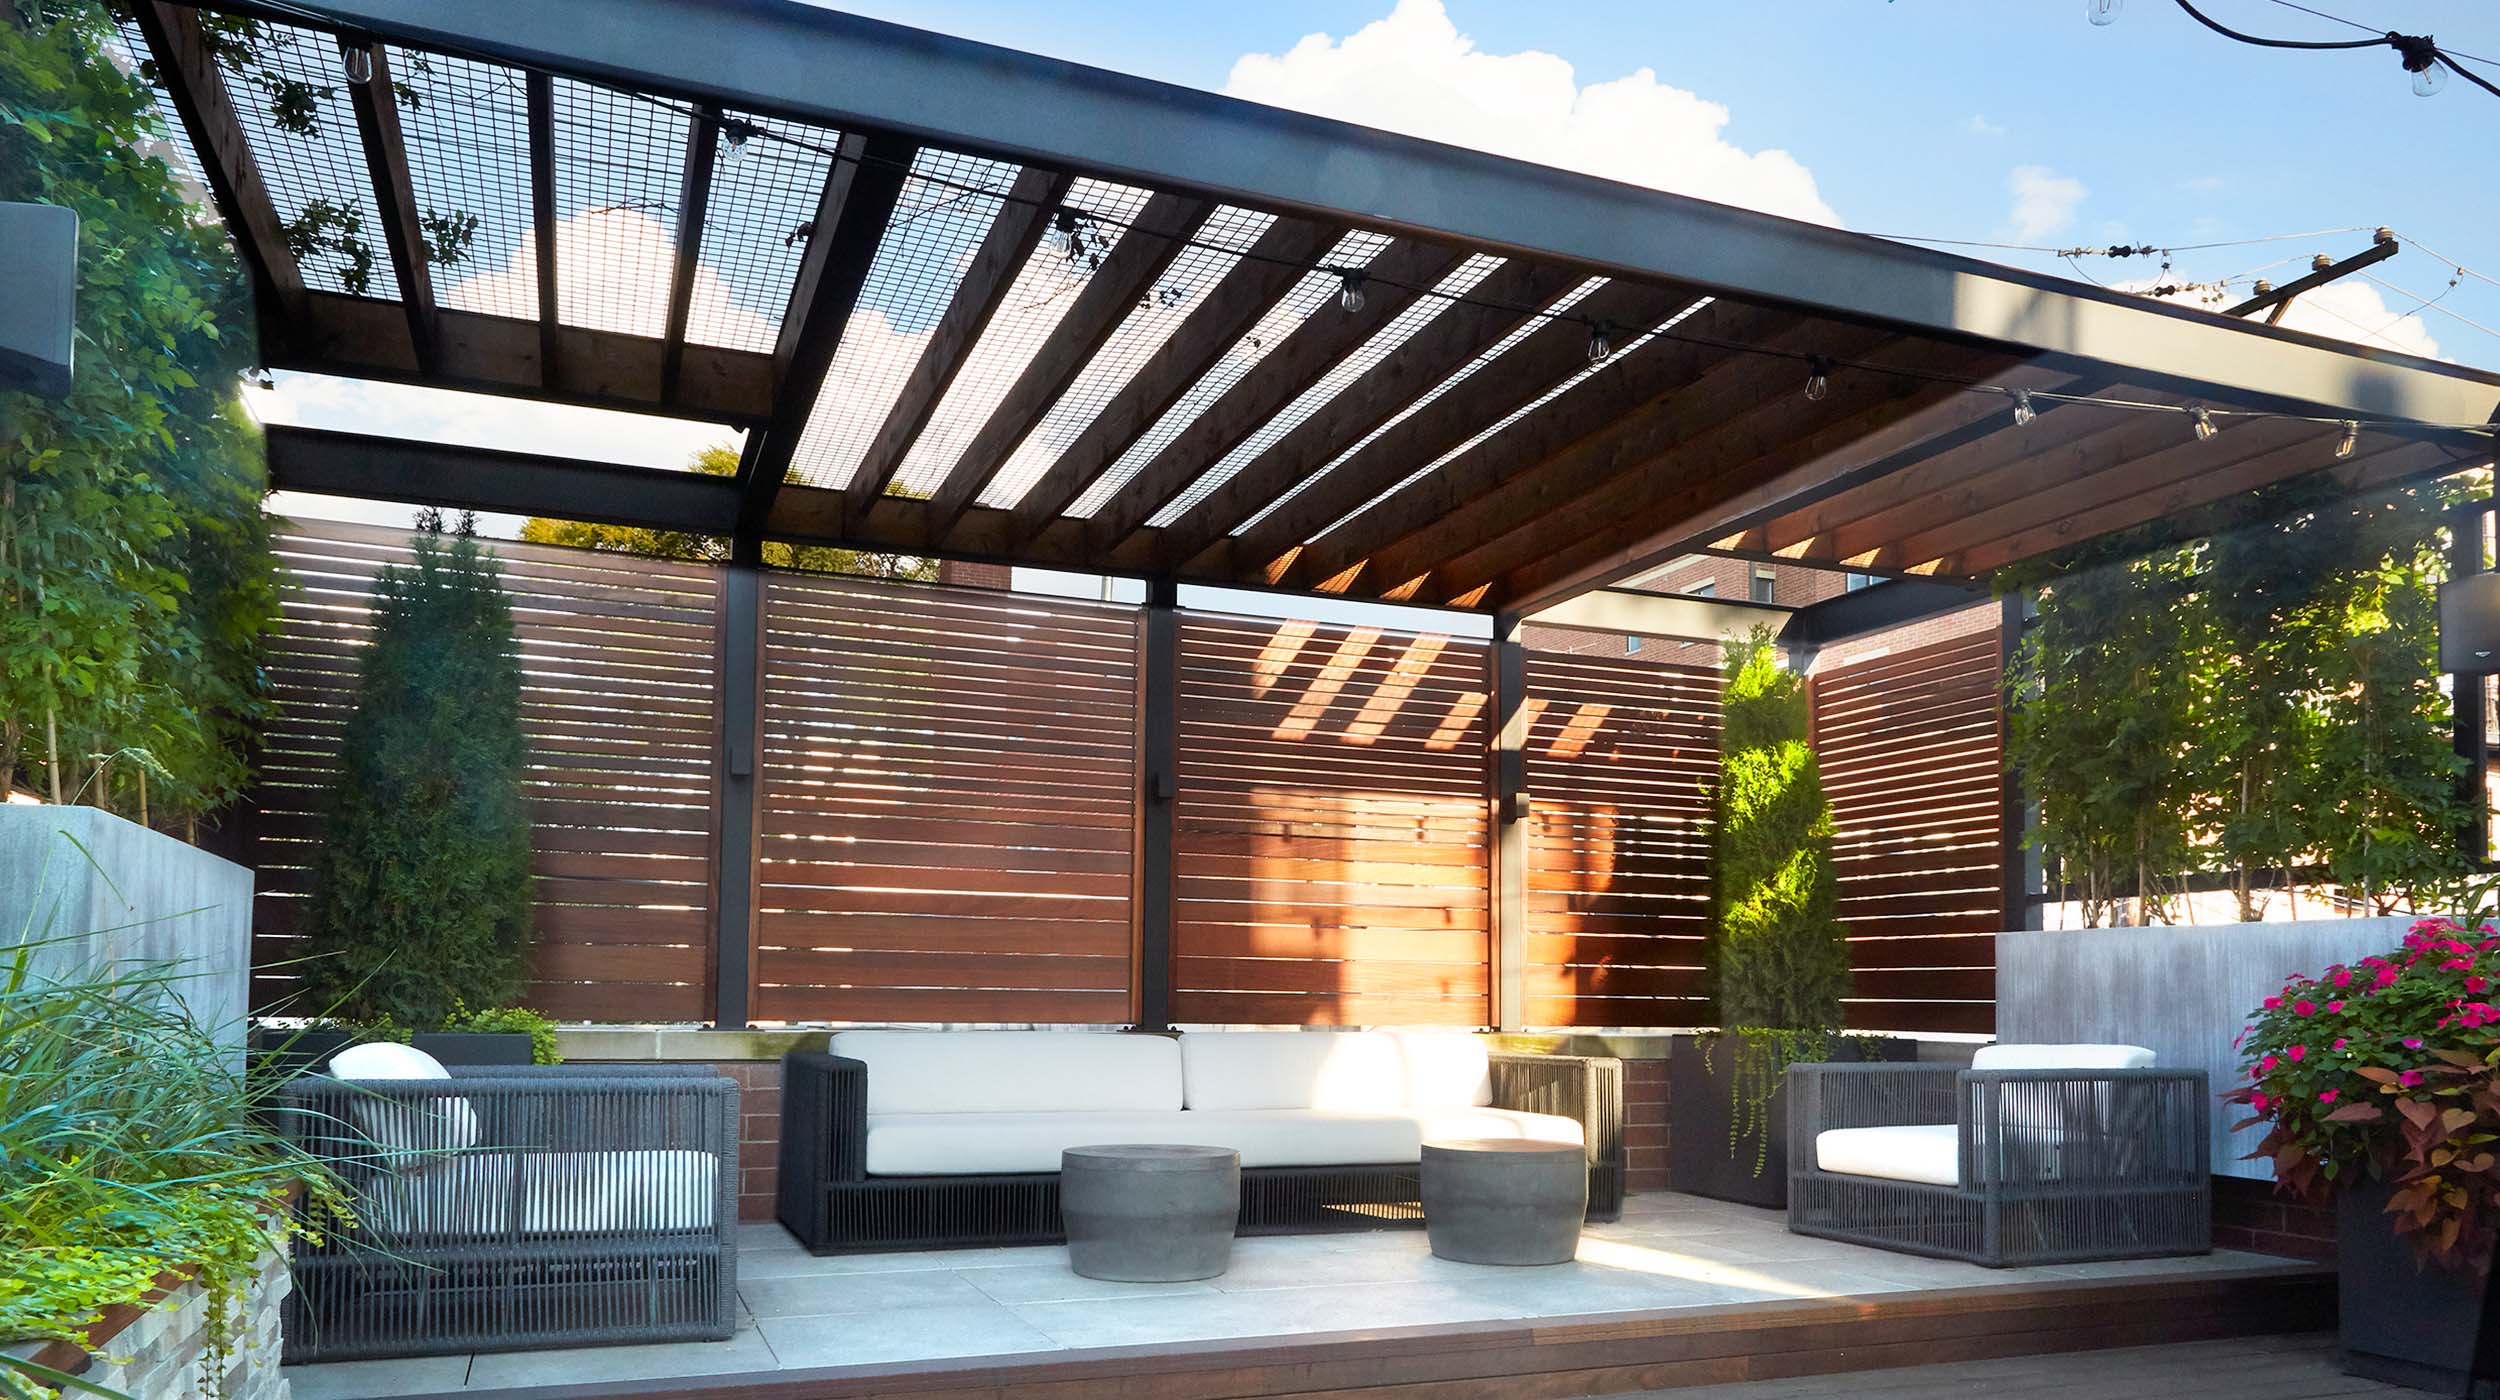 Iron & Ipe Garage Roof Deck - Projects - Chicago Roof Deck + Garden